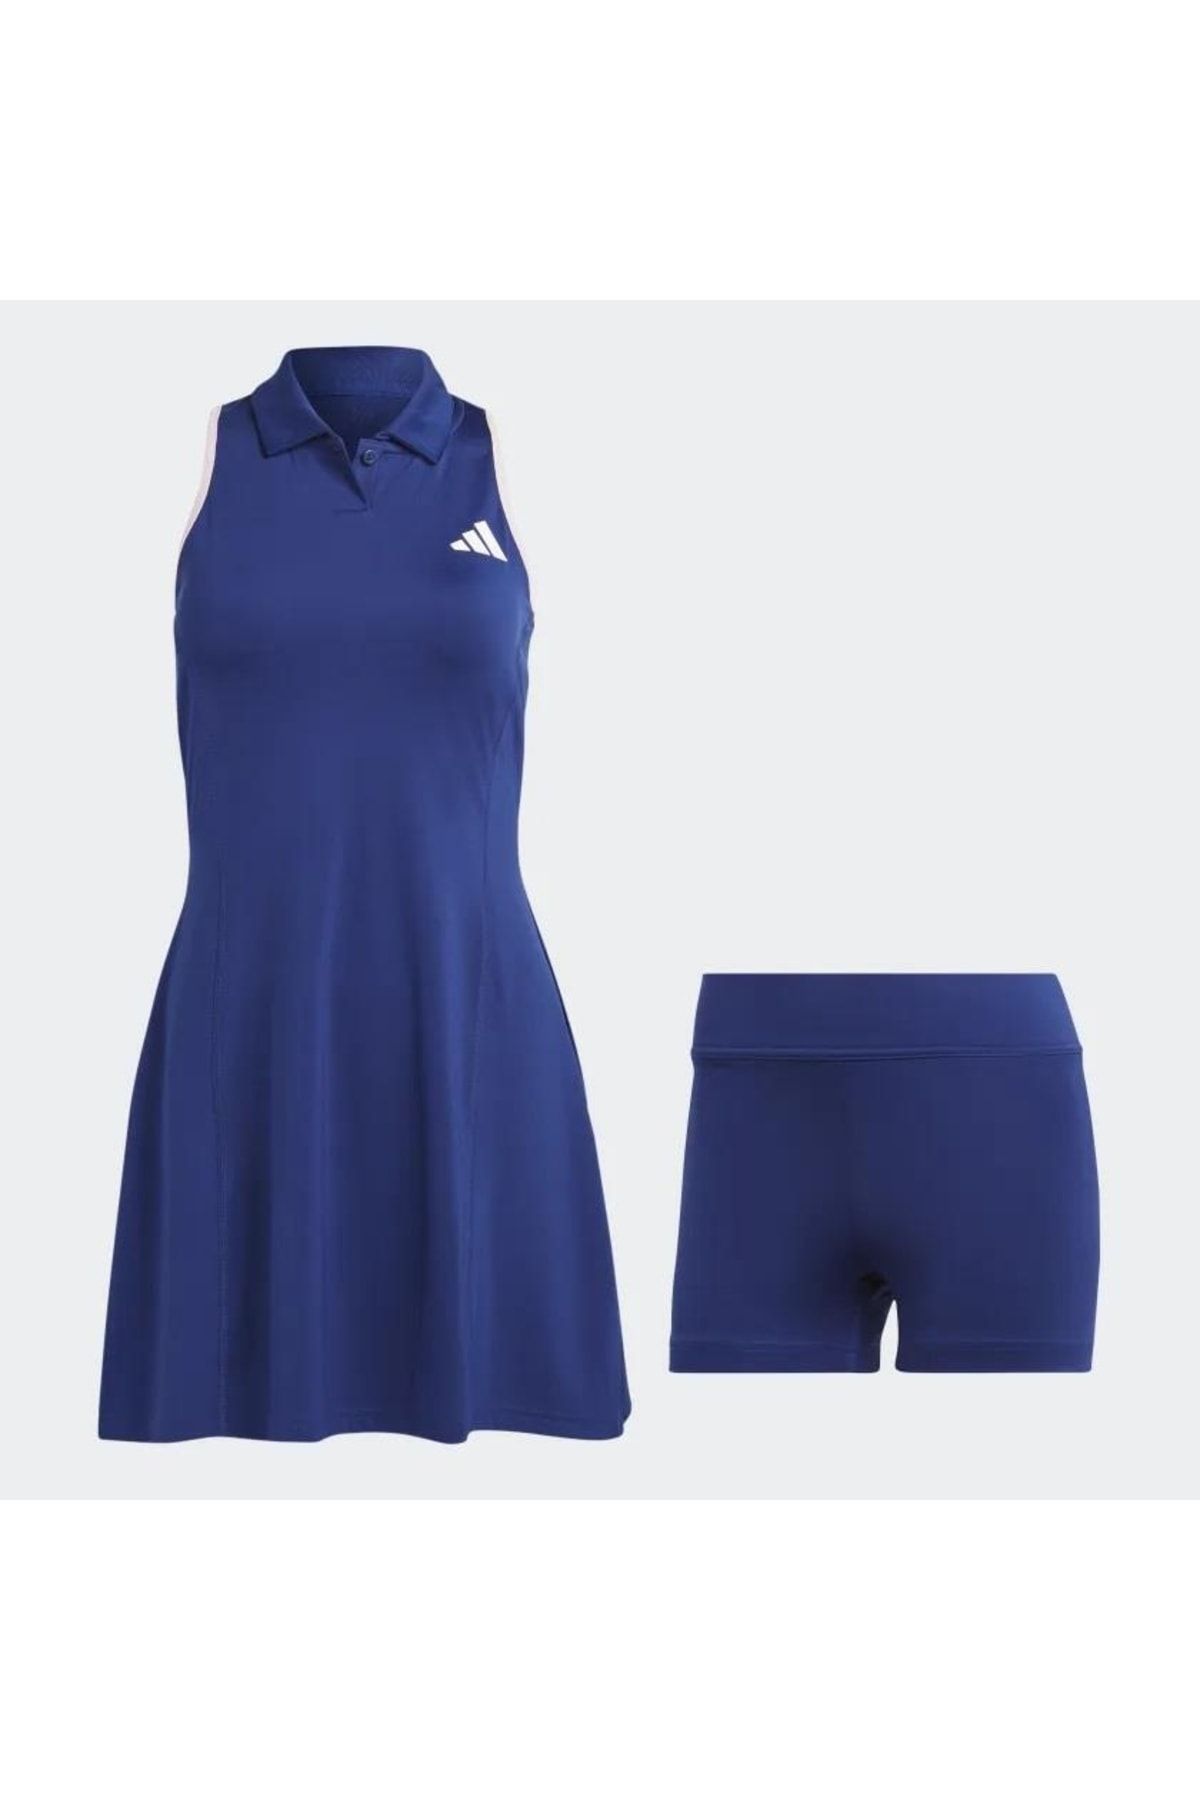 adidas Ic2186 Clubhouse Premium Klasik Kadın Mavi Spor Tenis Elbise